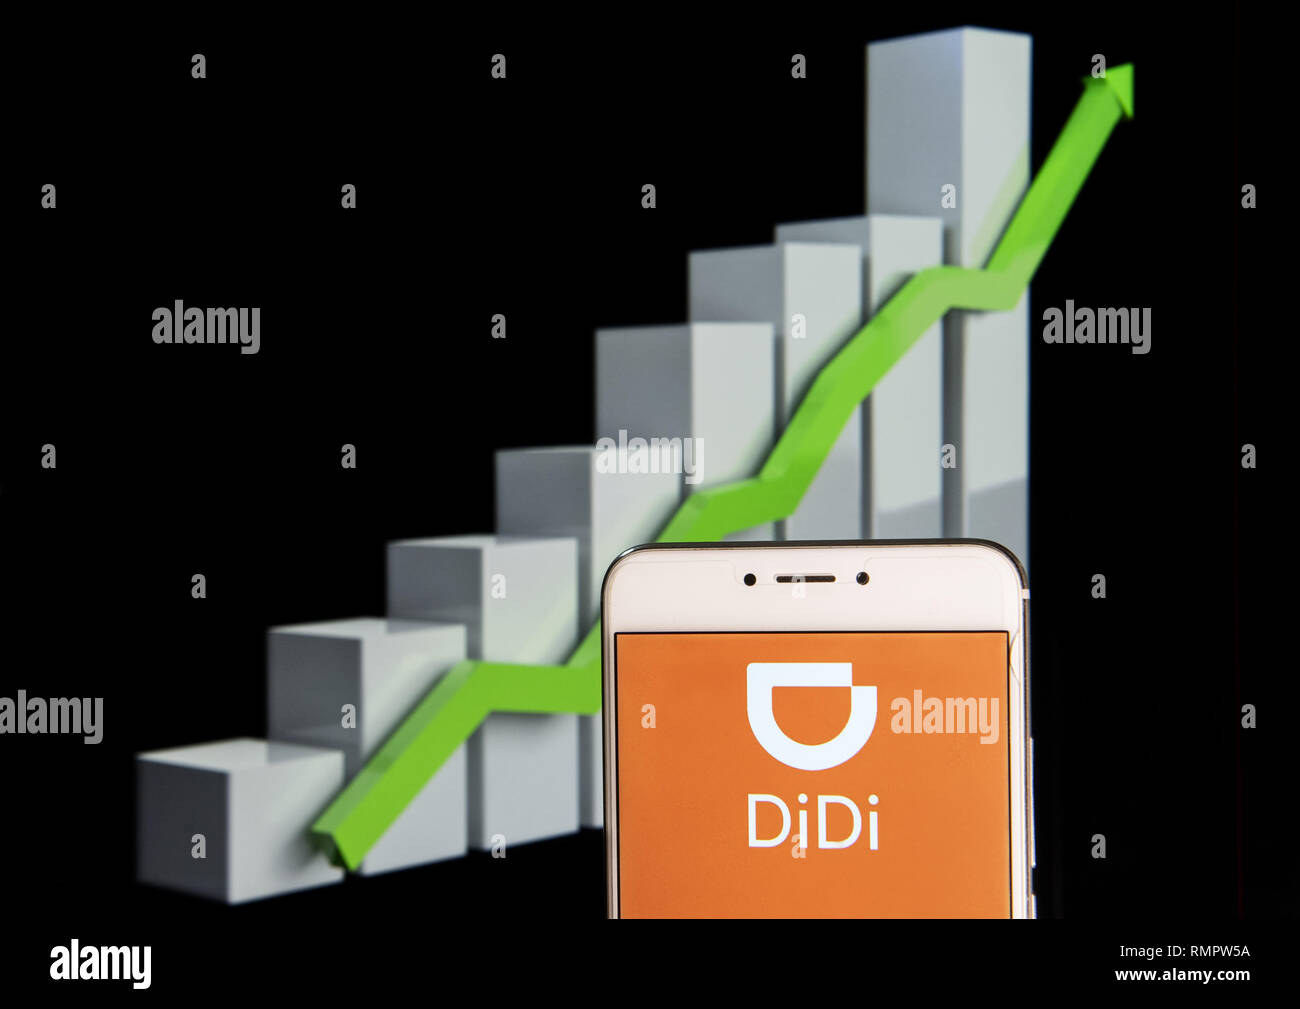 Didi Stock Chart